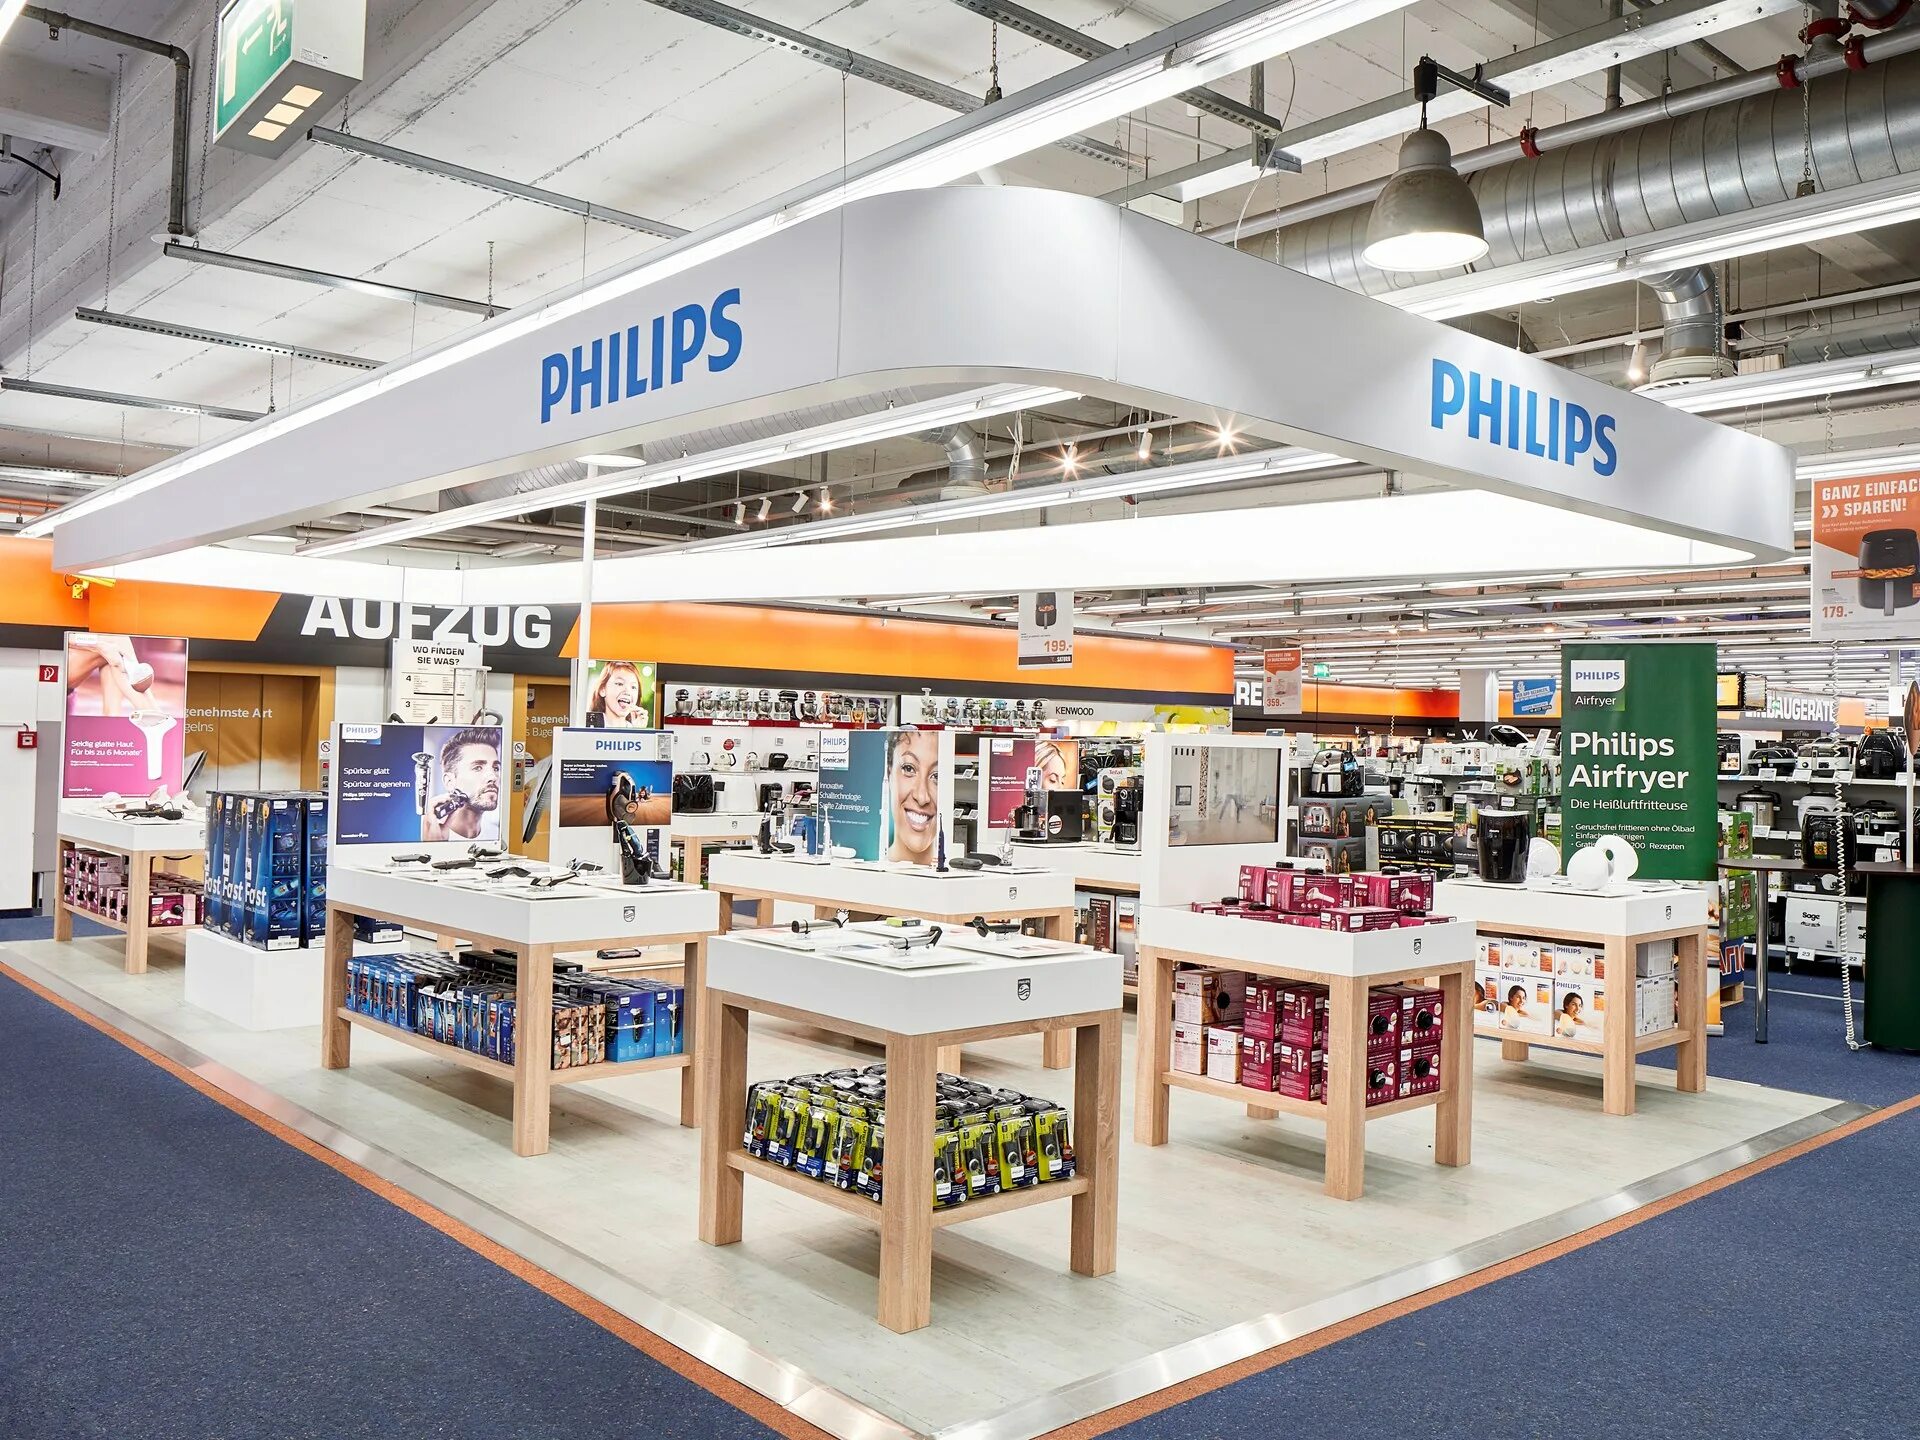 Сайт филипс магазин. Фирменный магазин Филипс. Фирменный магазин Philips в Москве. Интерьер магазина Philips. Интернет магазин shop Philips.